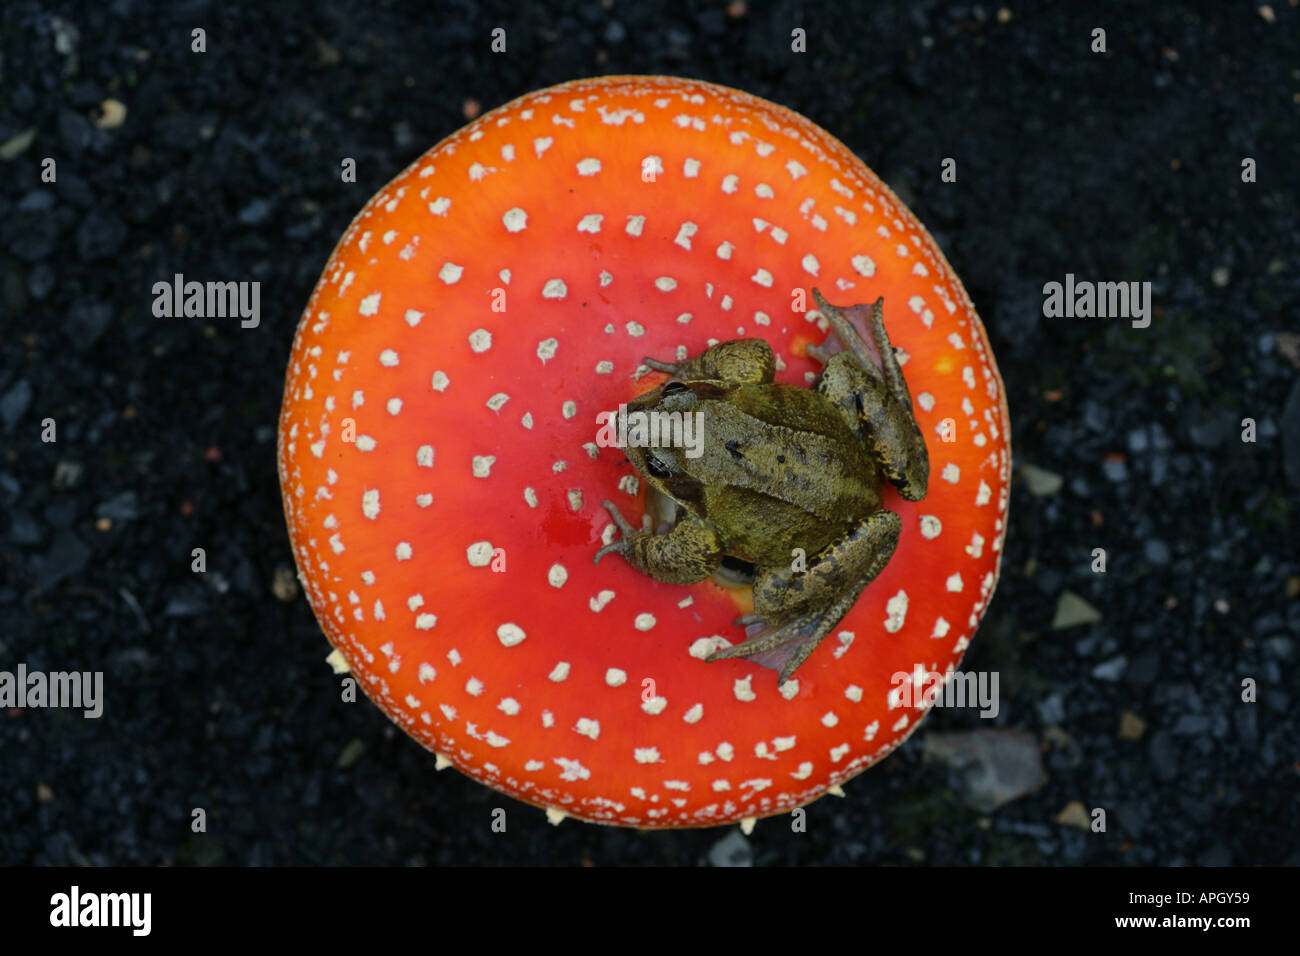 GEMEINSAMEN Frosch Rana Temporaria auf Fliegenpilz-Pilze Stockfoto